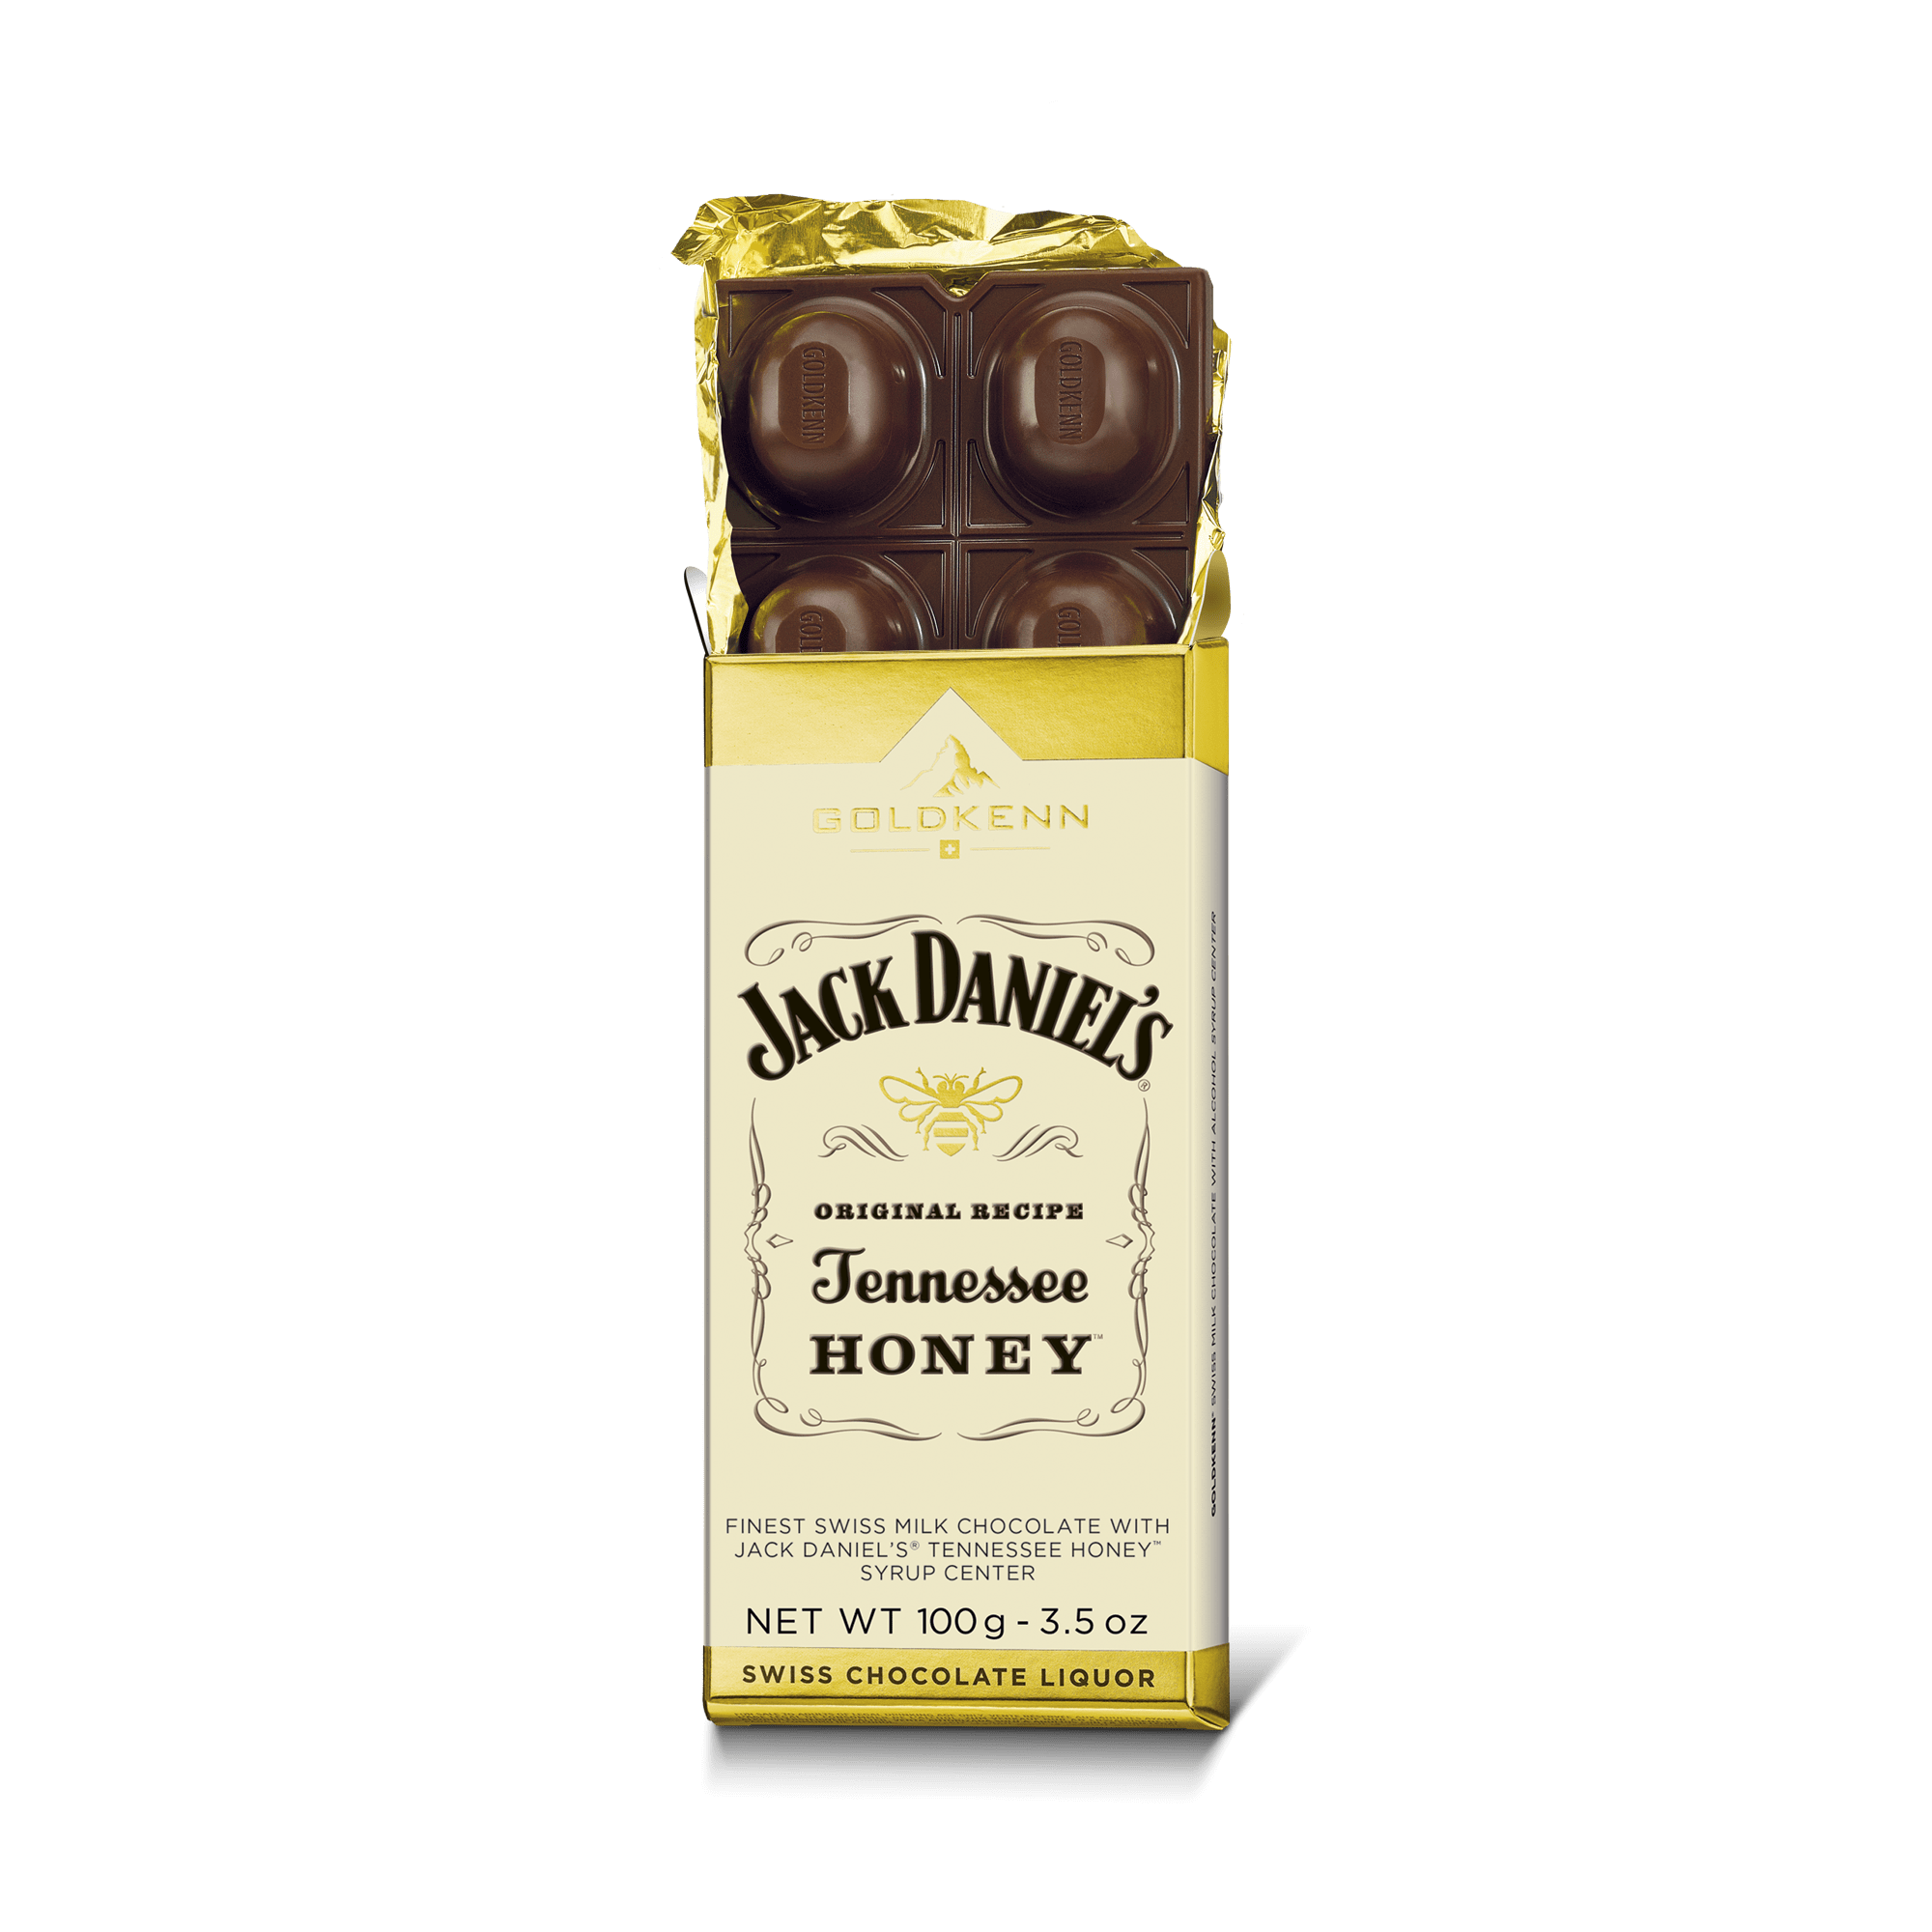 Goldkenn 37% Milk Chocolate Bar with Jack Daniel's Tennessee Honey Syrup Center Open-min